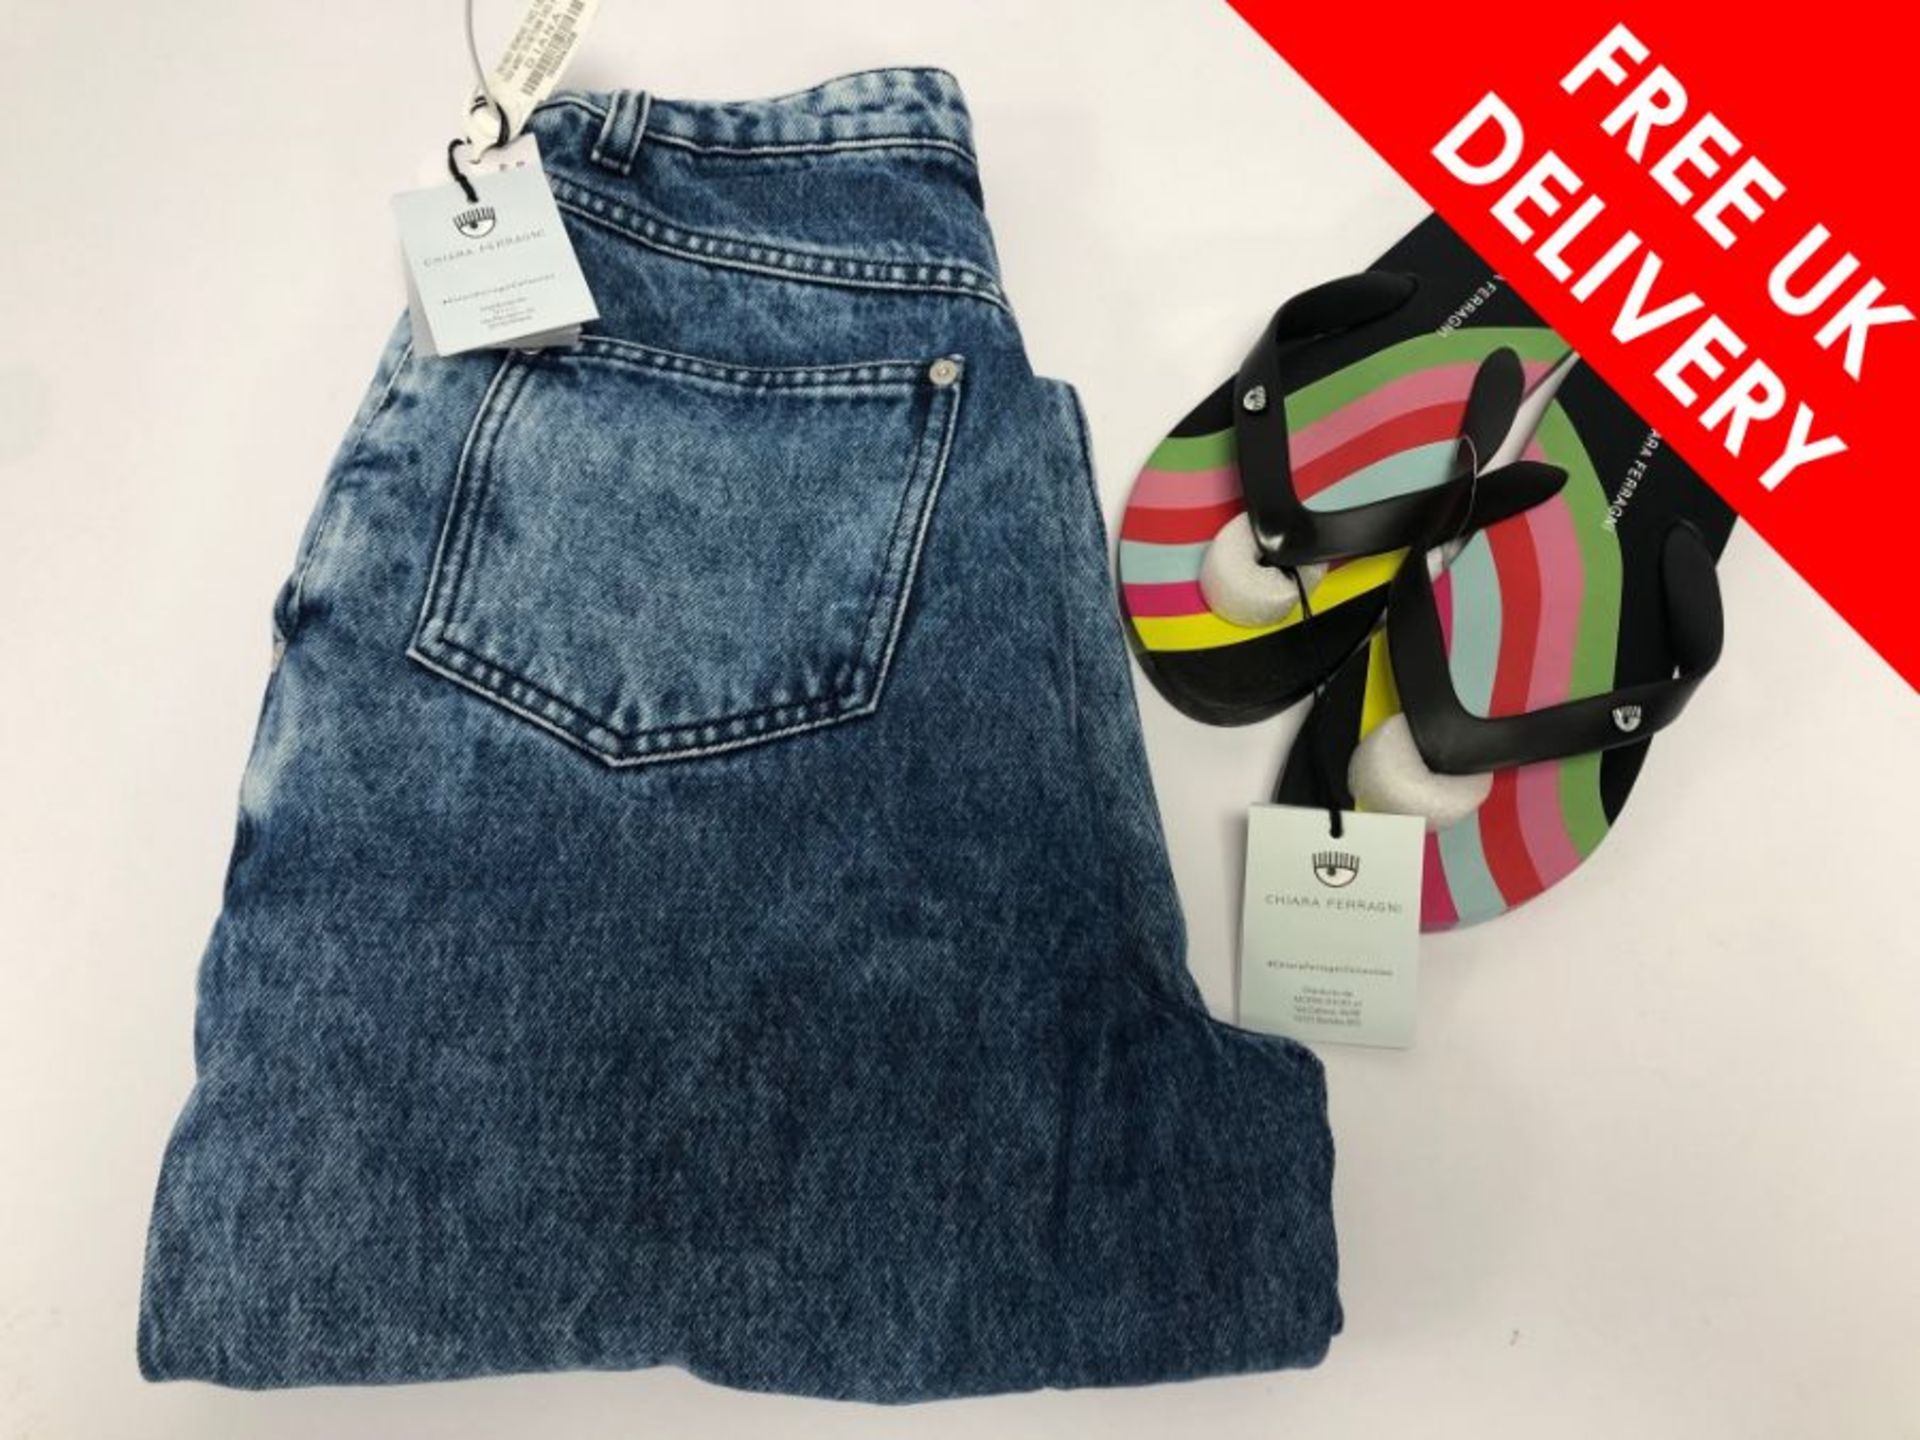 Chiara Ferragni Acid Wash Jeans UK 10/12 and Rainbow Flip-flops UK 4